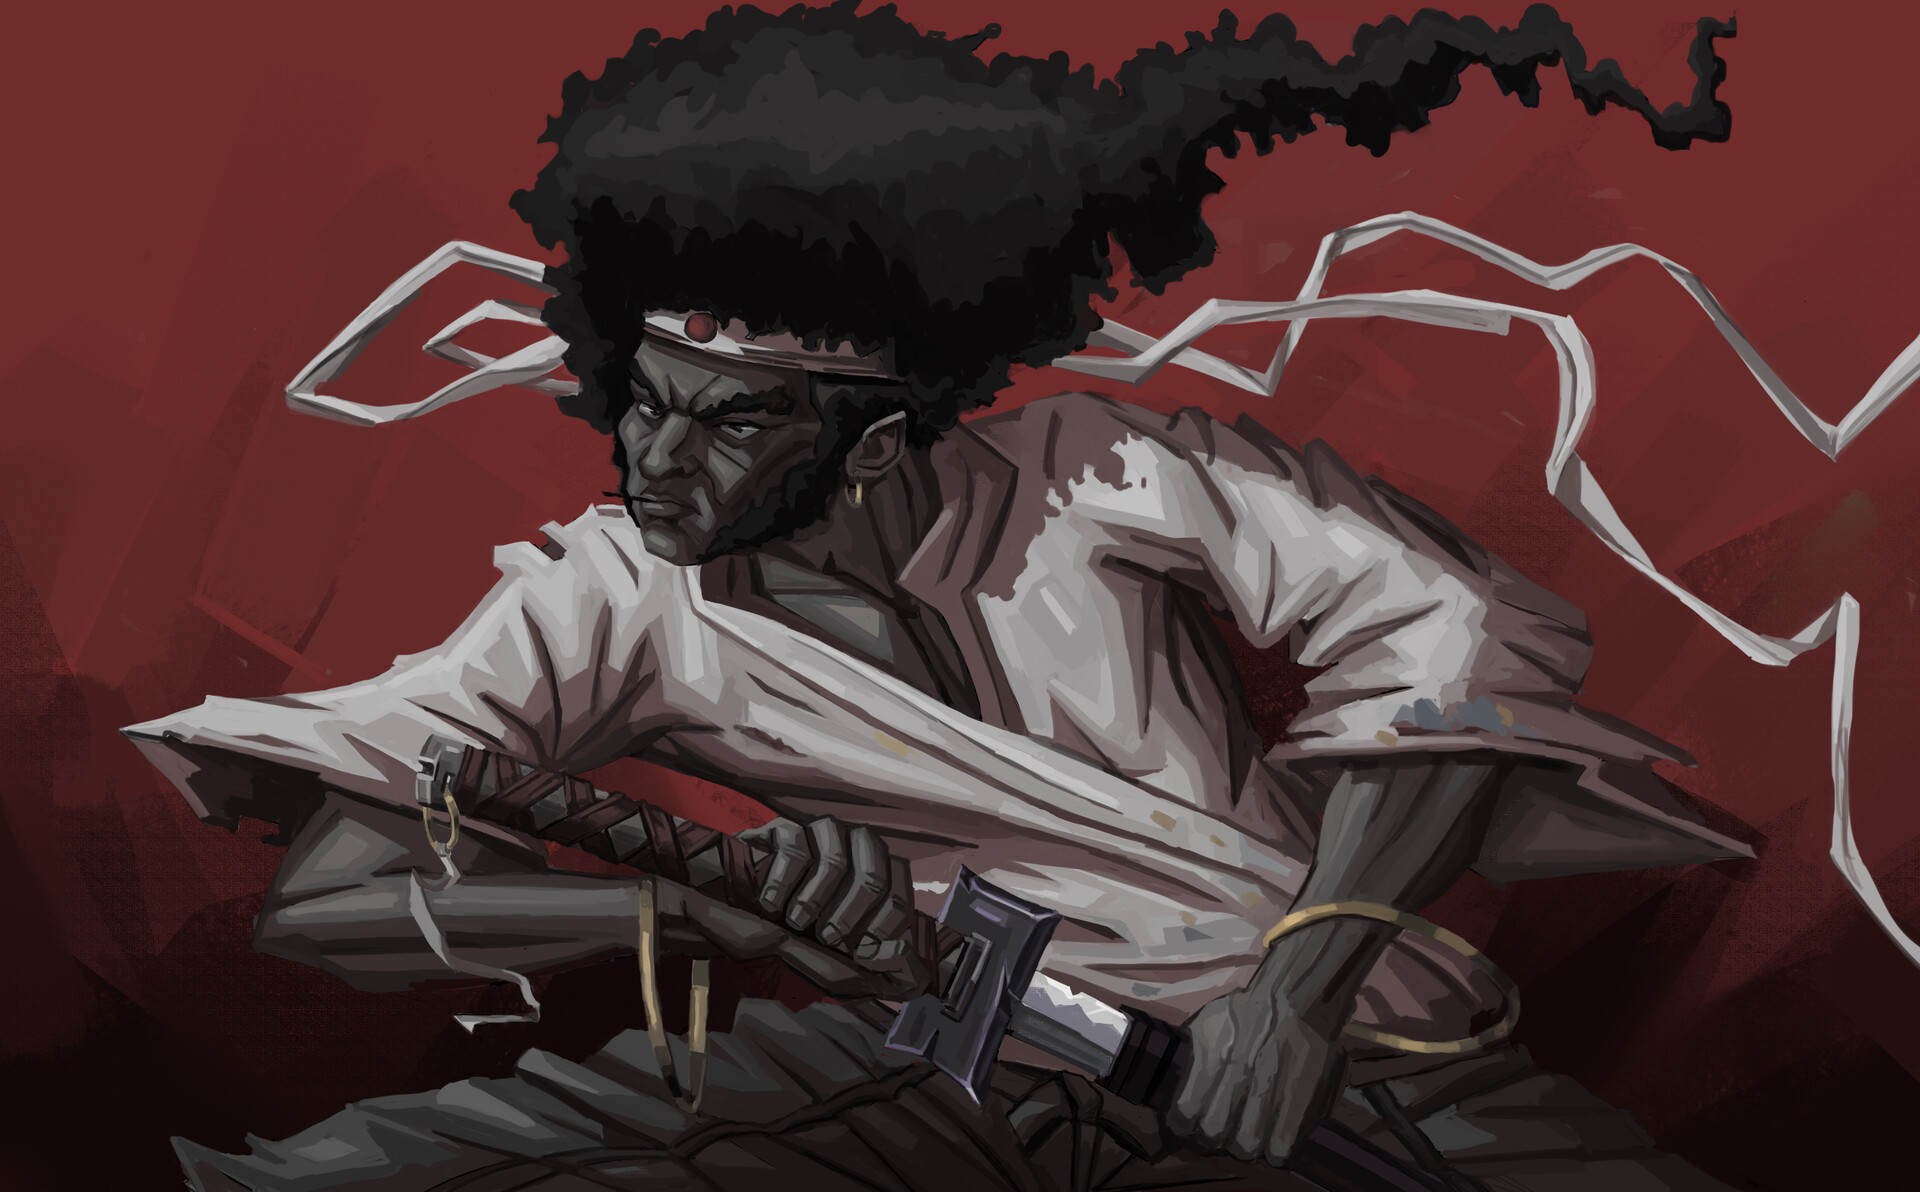 Afro Illustration - Characters & Art - Afro Samurai